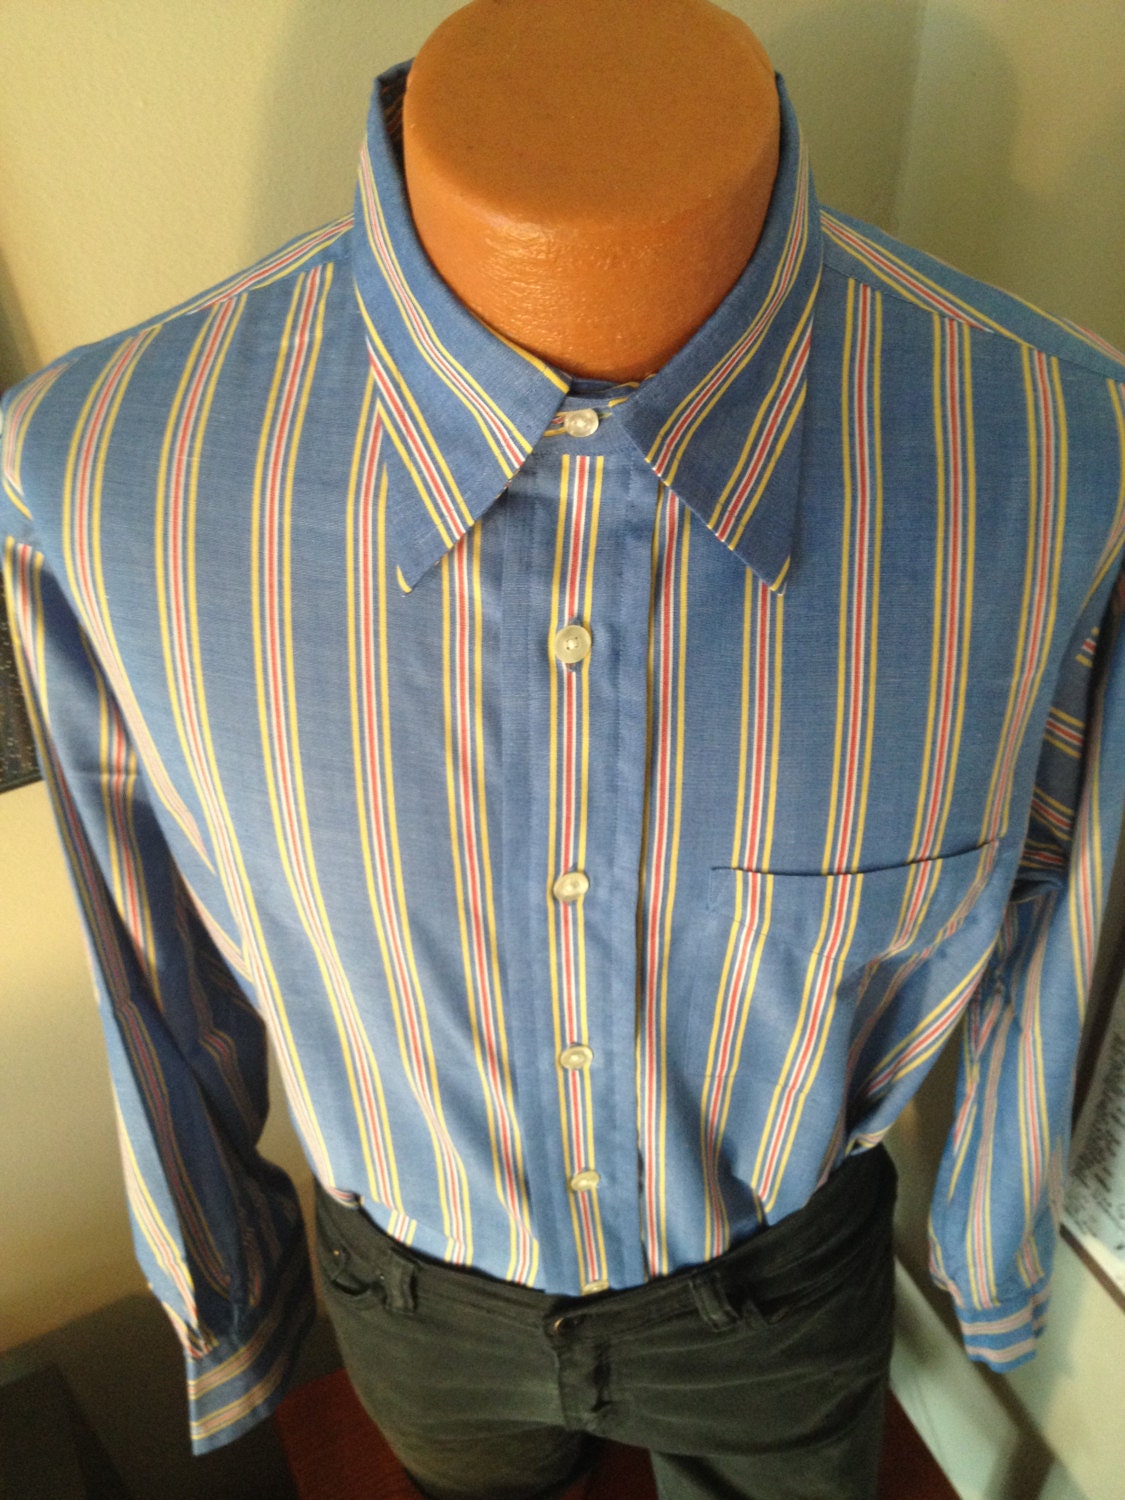 Vintage 1960's Striped Dress Shirt by Gant Shirtmakers